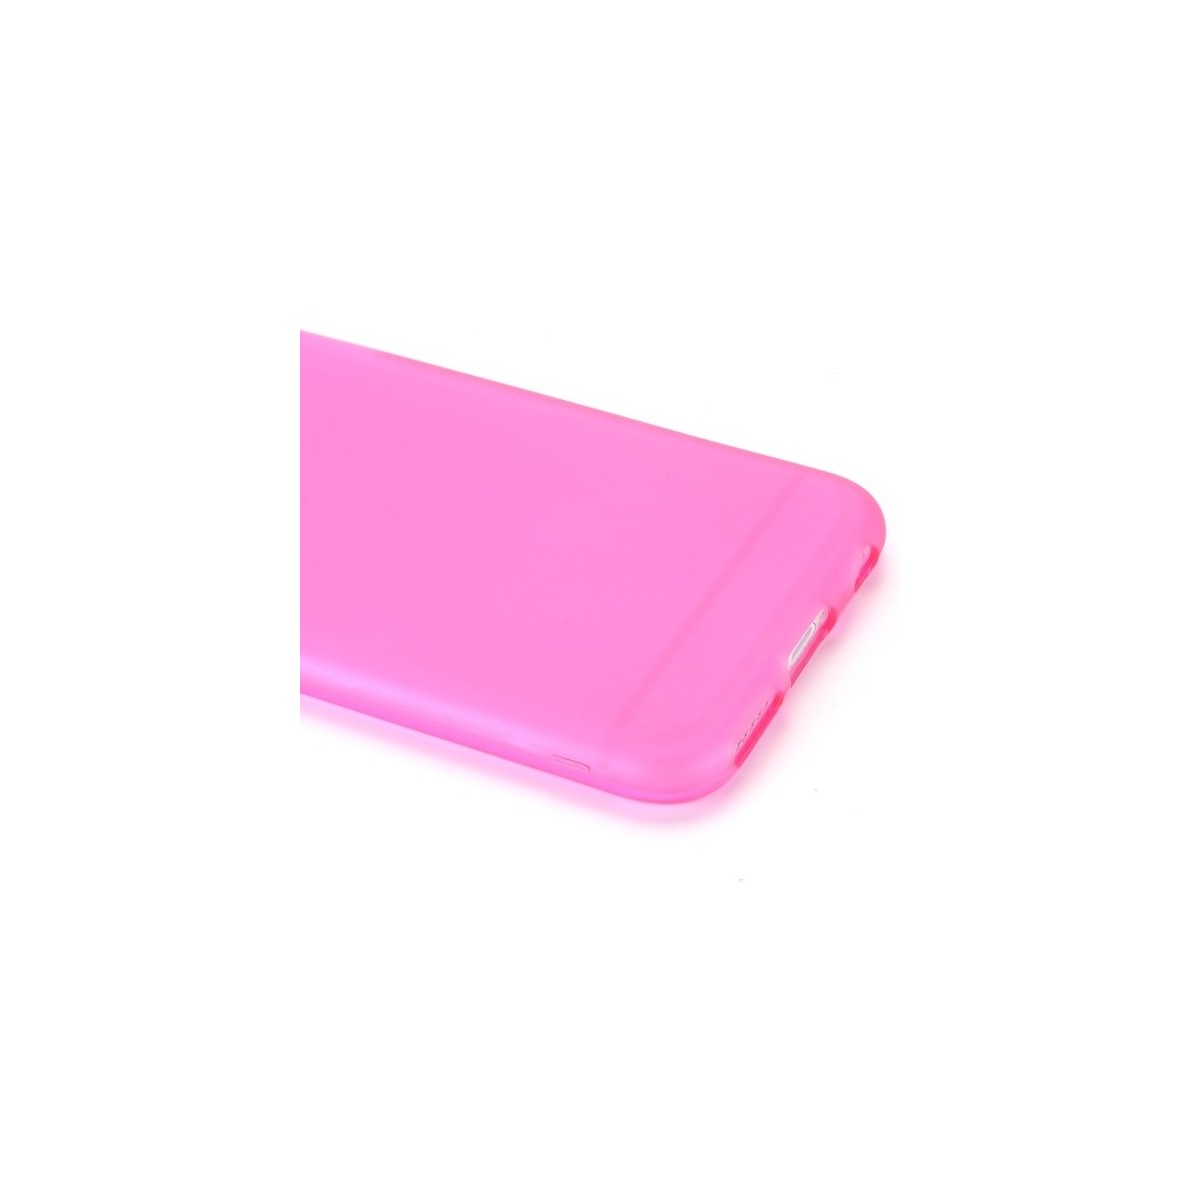 Coque iPhone 6 / 6S Rose transparente souple - Crazy Kase